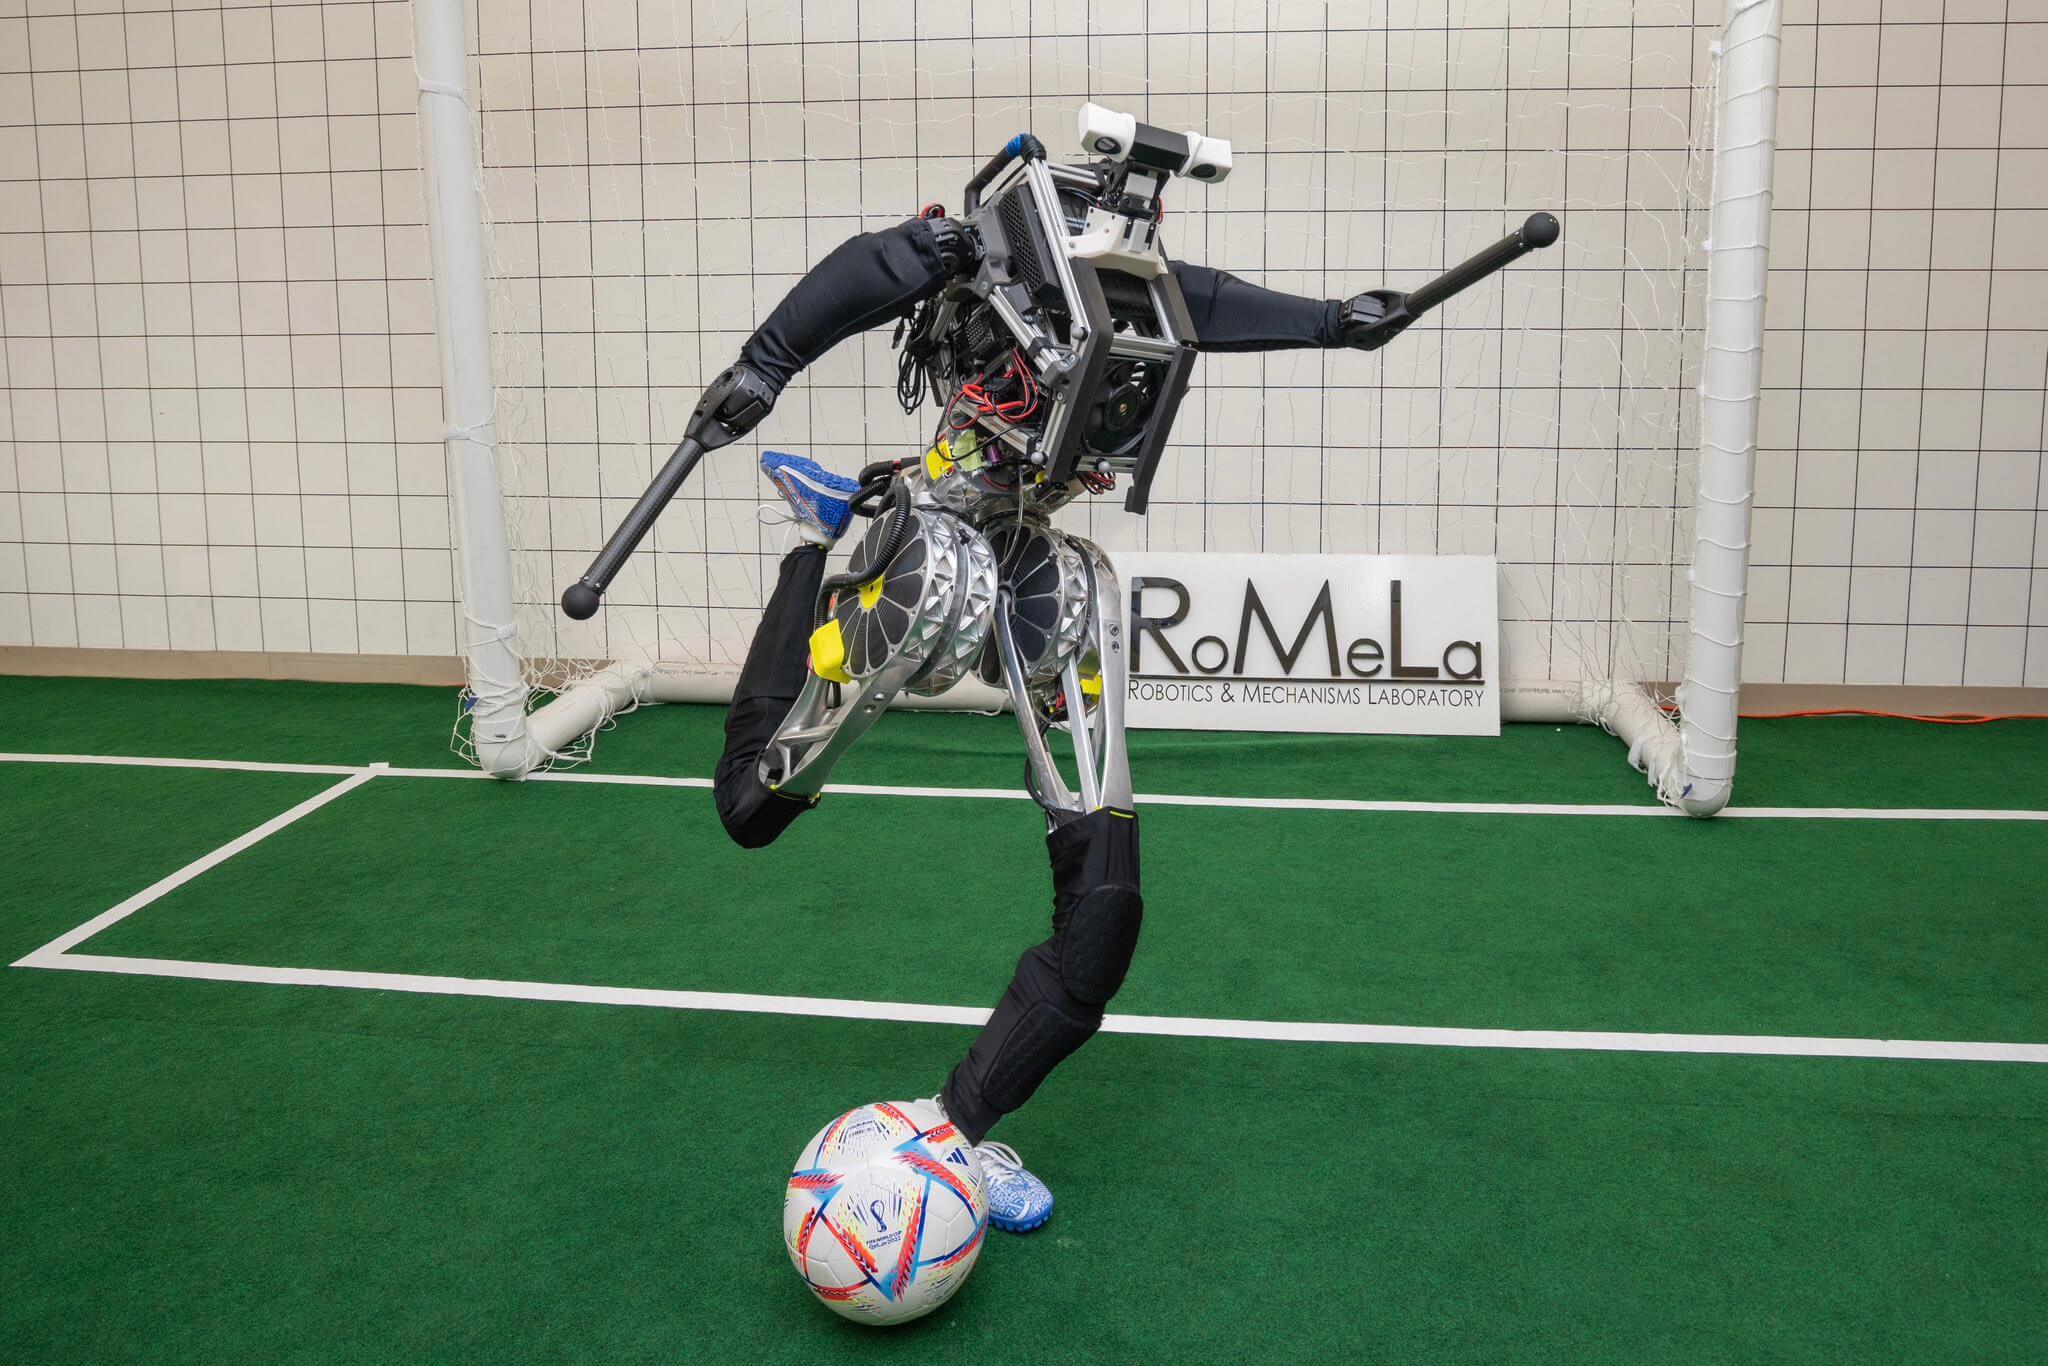 UCLA memperkenalkan robot ARTEMIS baharu untuk kejohanan bola sepak